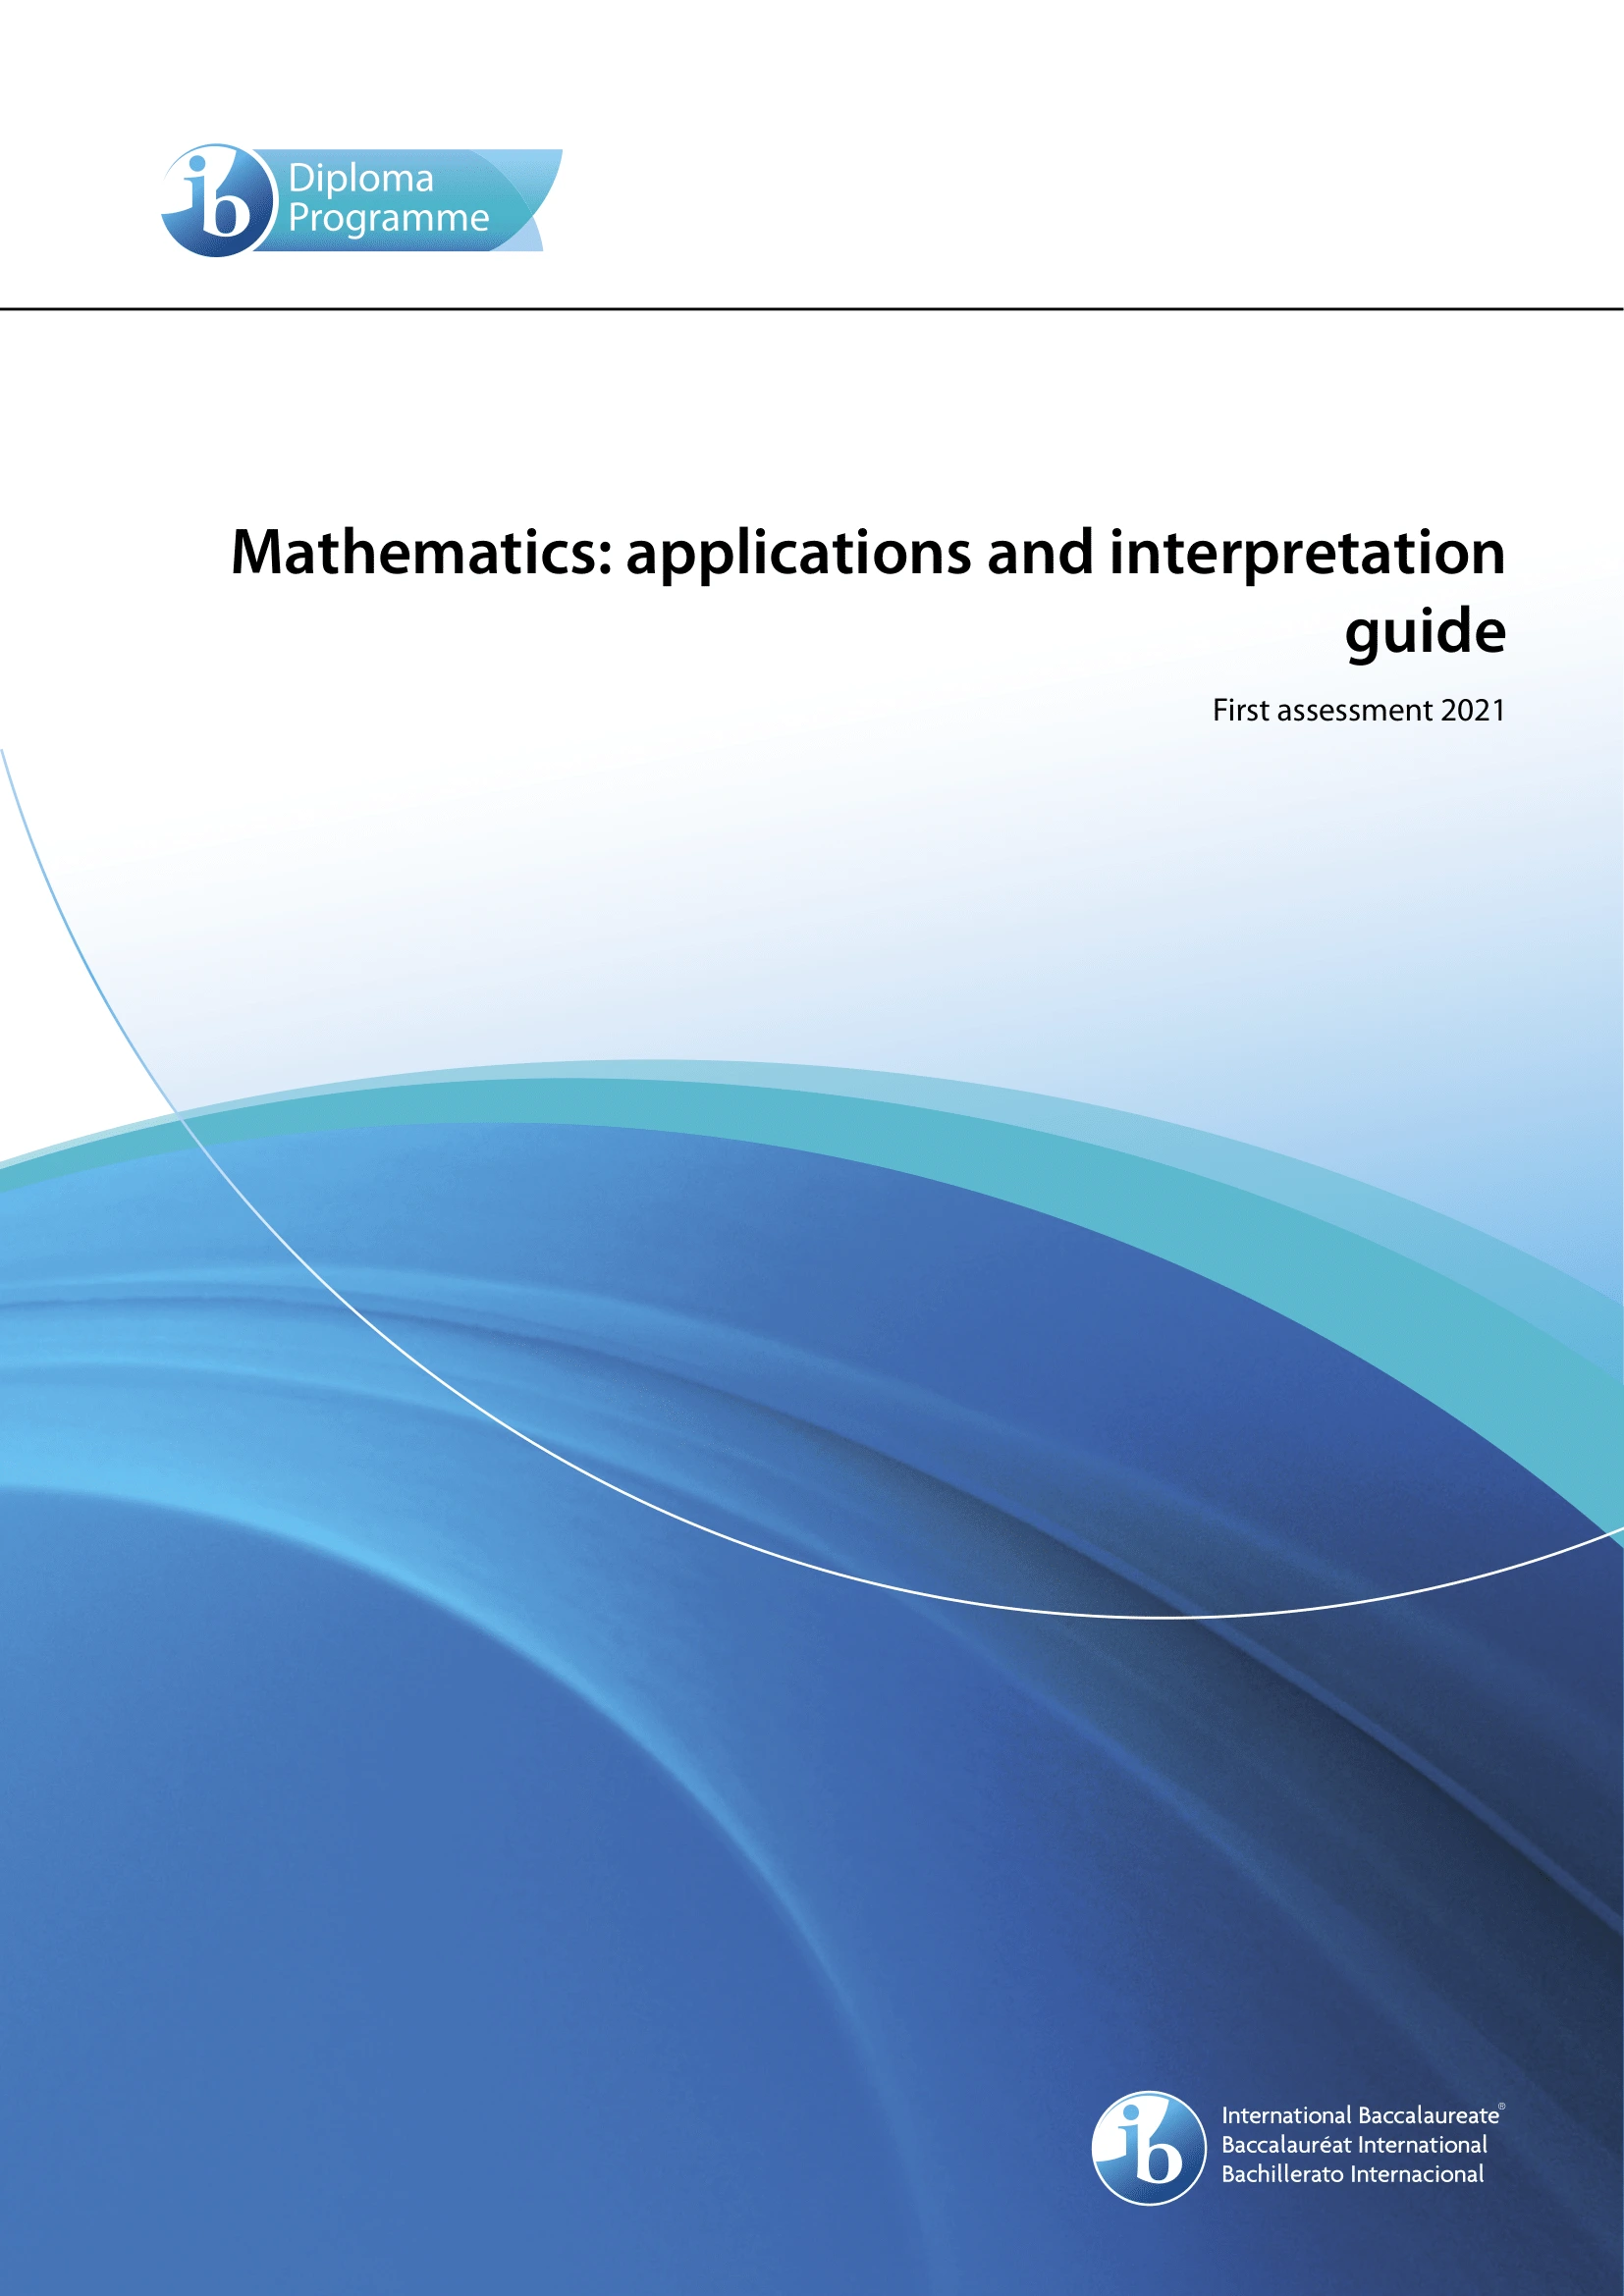 ibdp mathematics applications and interpretation guide preview-1